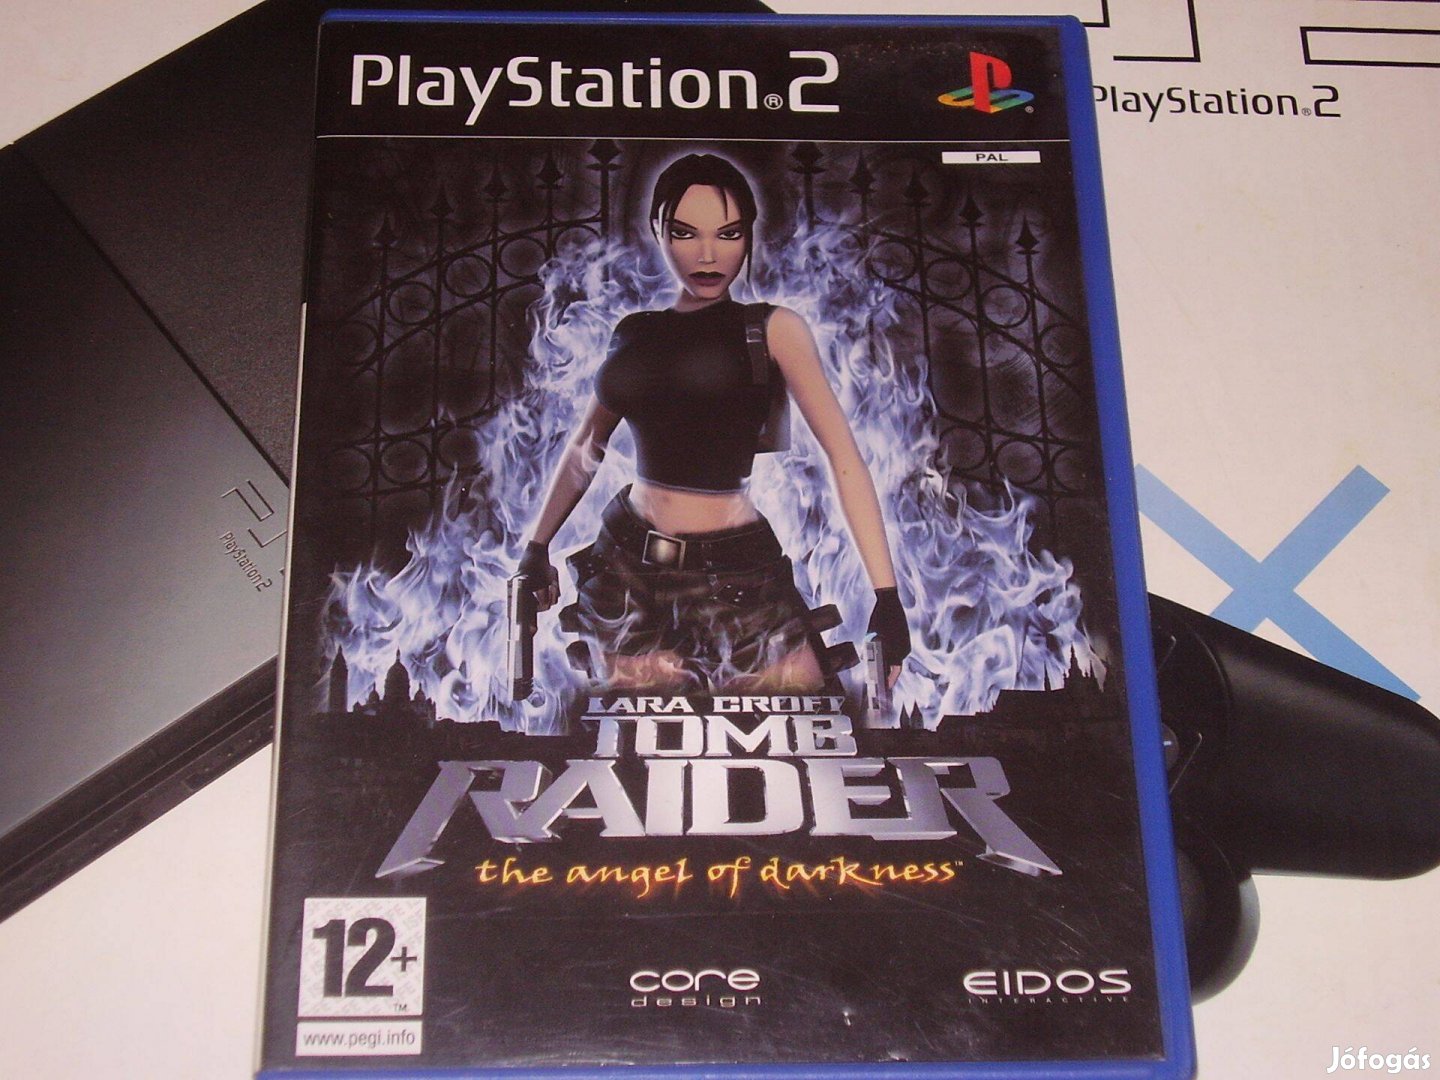 Lara Croft Tomb Raider:The Angel of Darkness Ps2 eredeti lemez eladó